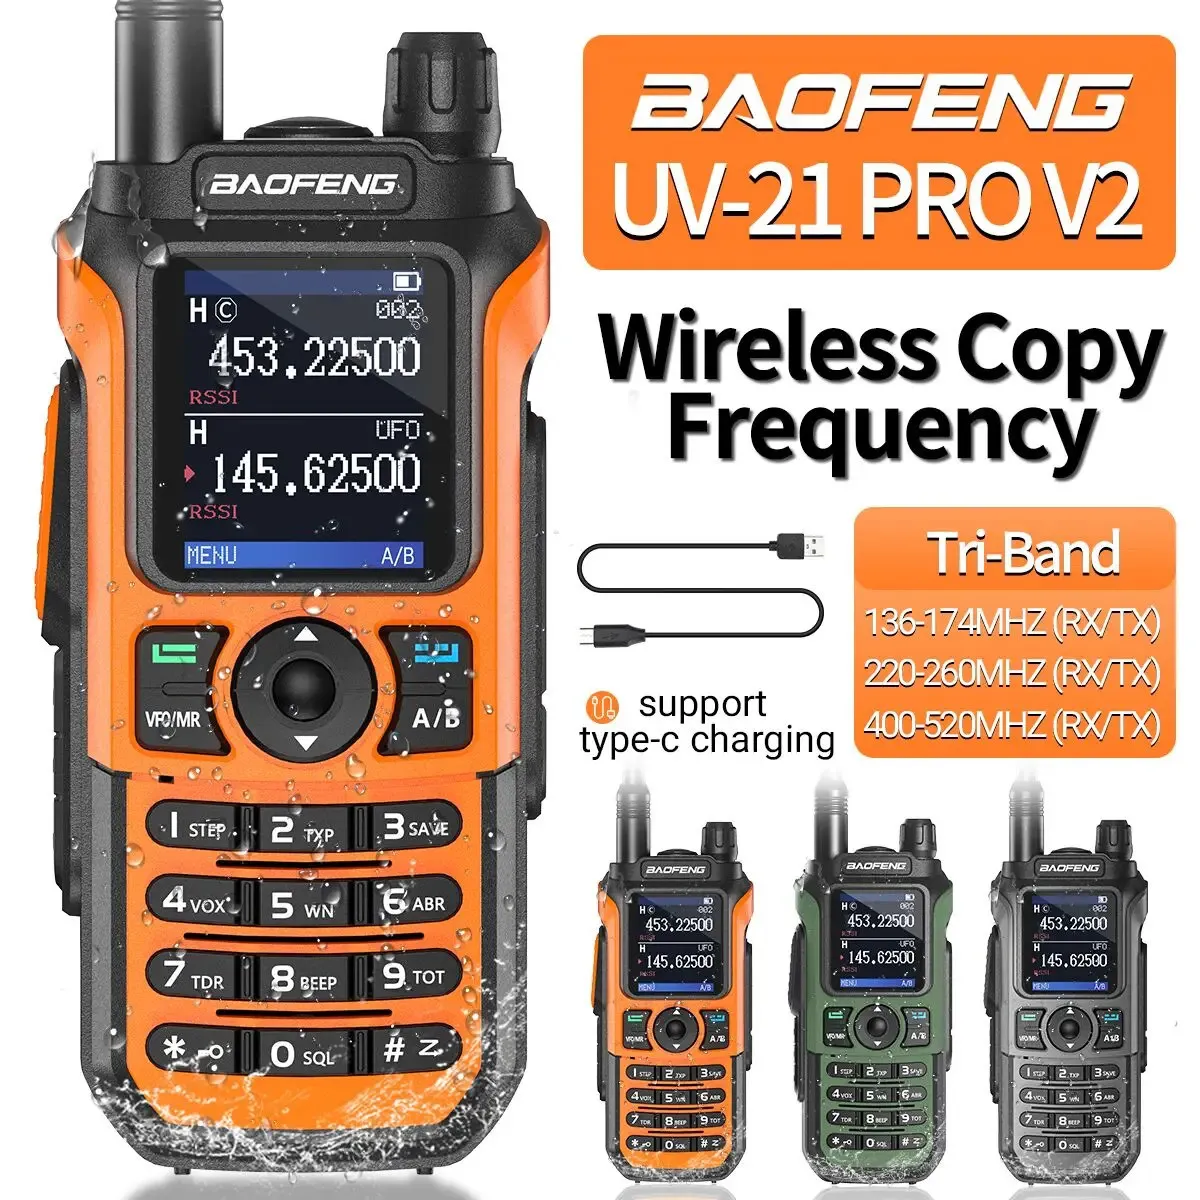 Baofeng UV-21 Pro V2 Walkie Talkie Long Range Wireless Copy Frequency Type-C Charger Tri Band Powerful Waterproof Tway Radio 240430